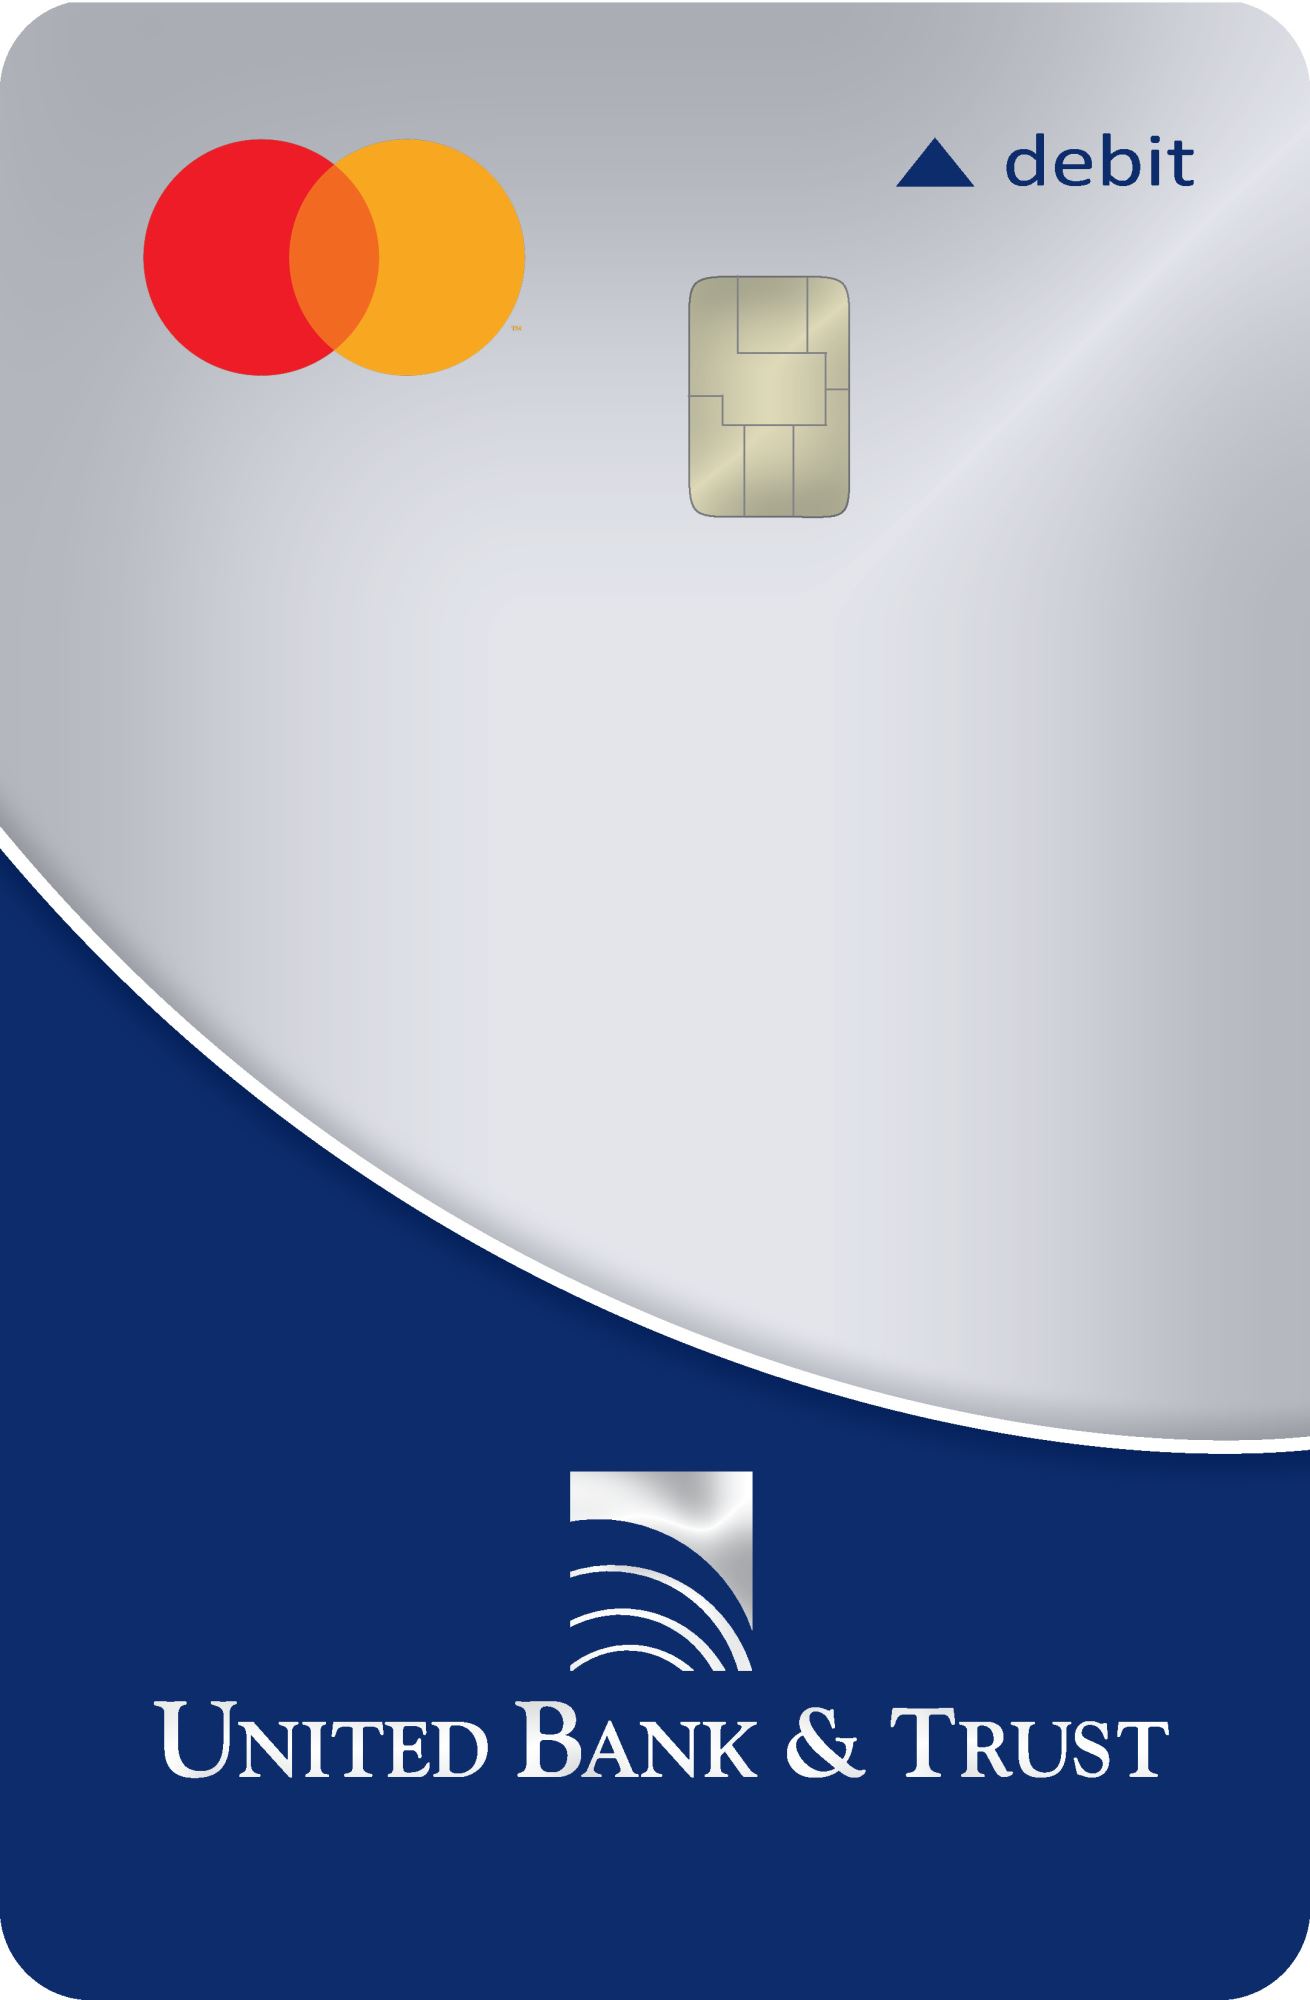 New Vertical Debit Card Design